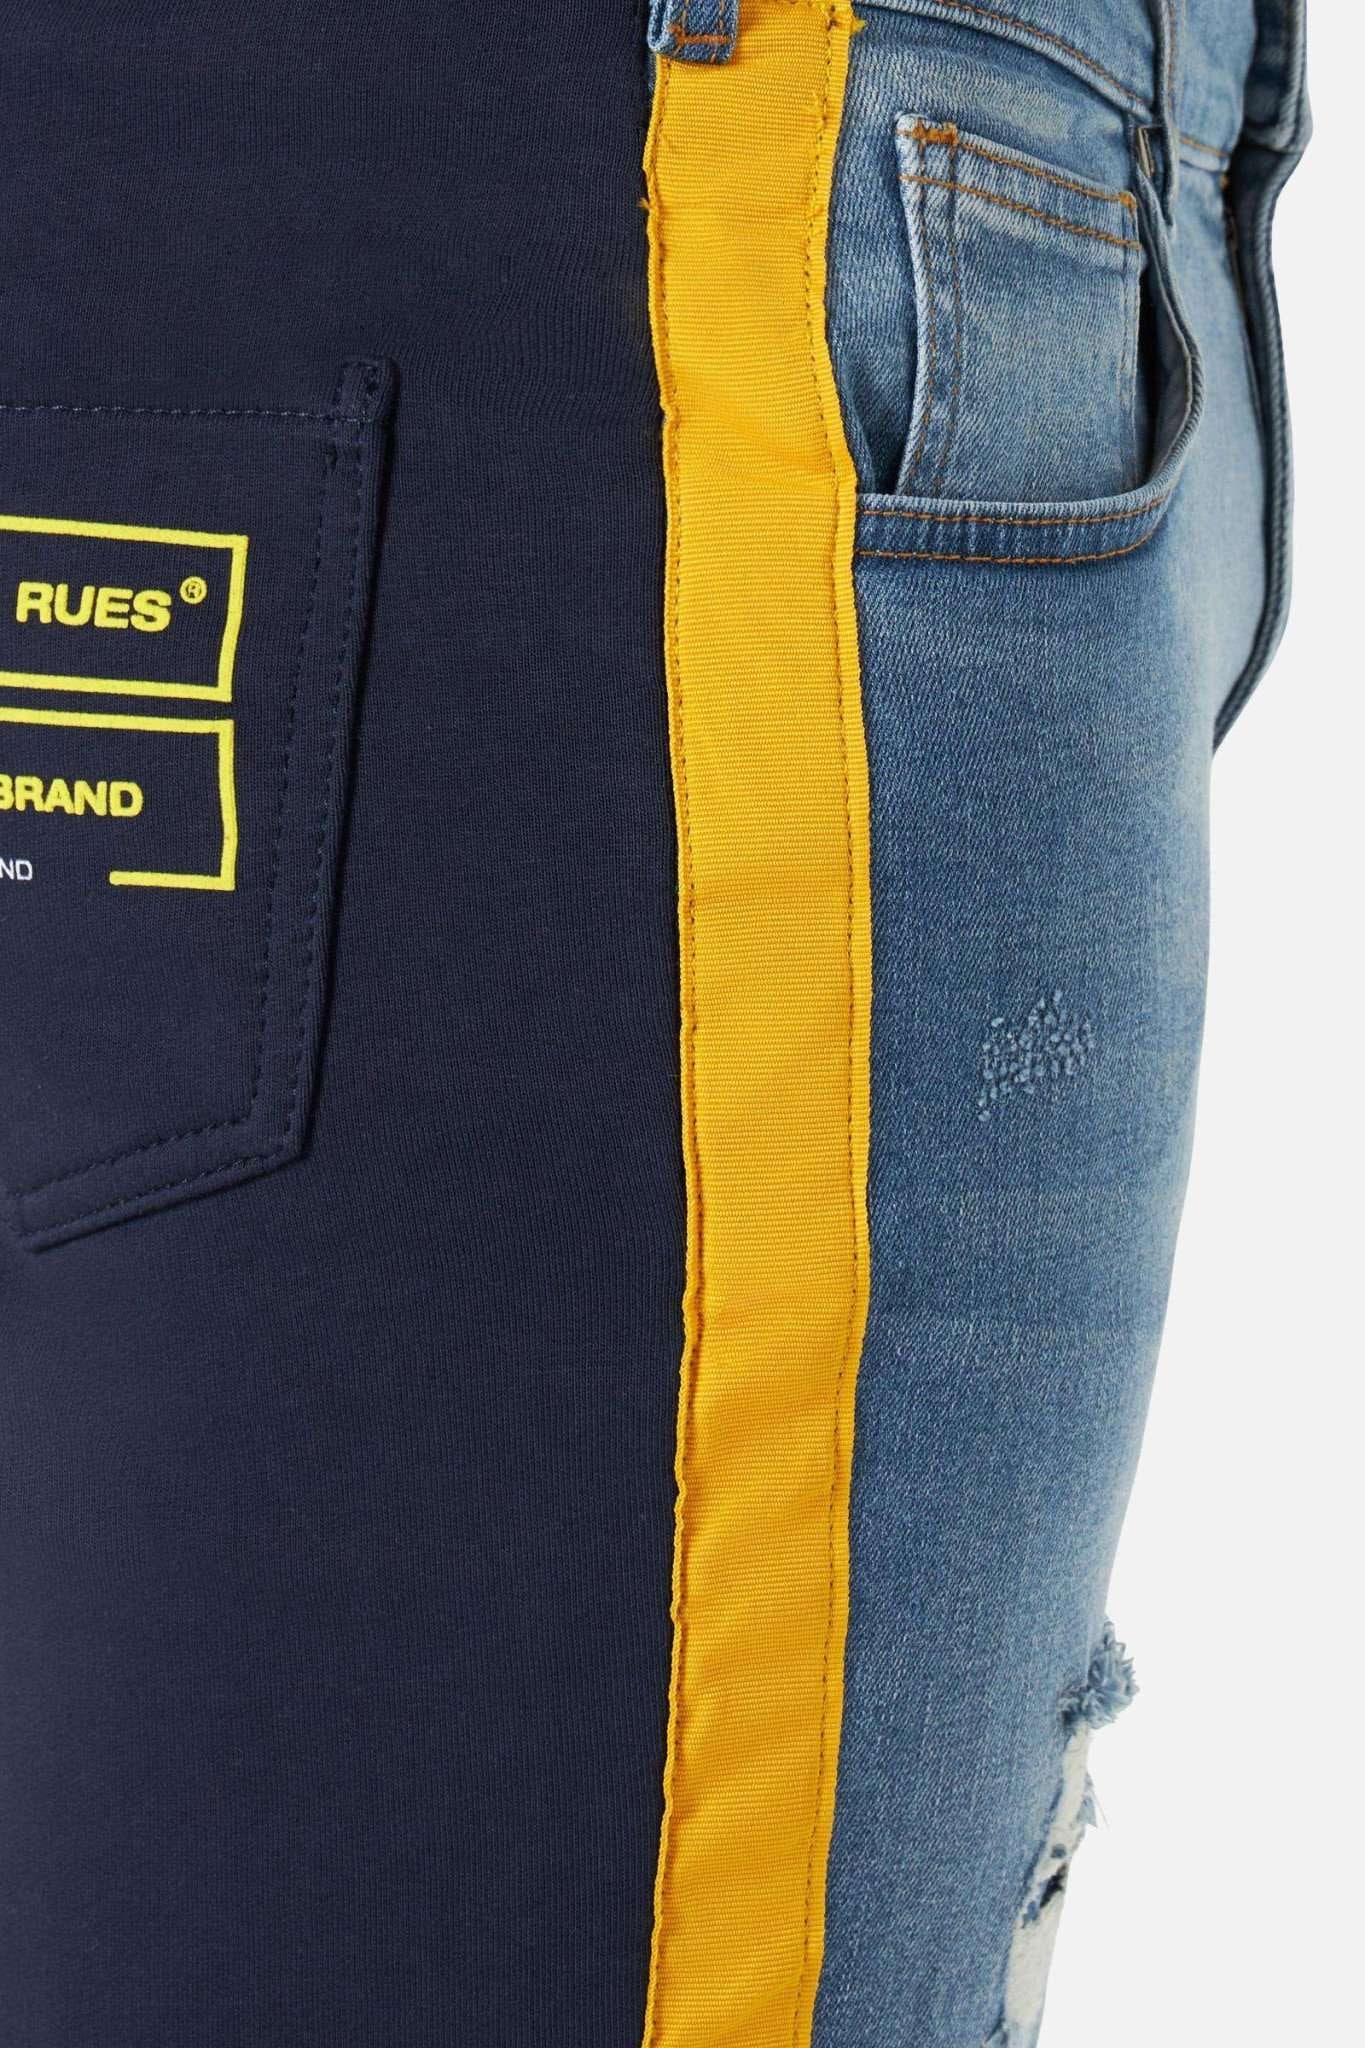 BOXEUR DES RUES Jeansshorts »Jeanshorts Mixed Fabric Shorts«